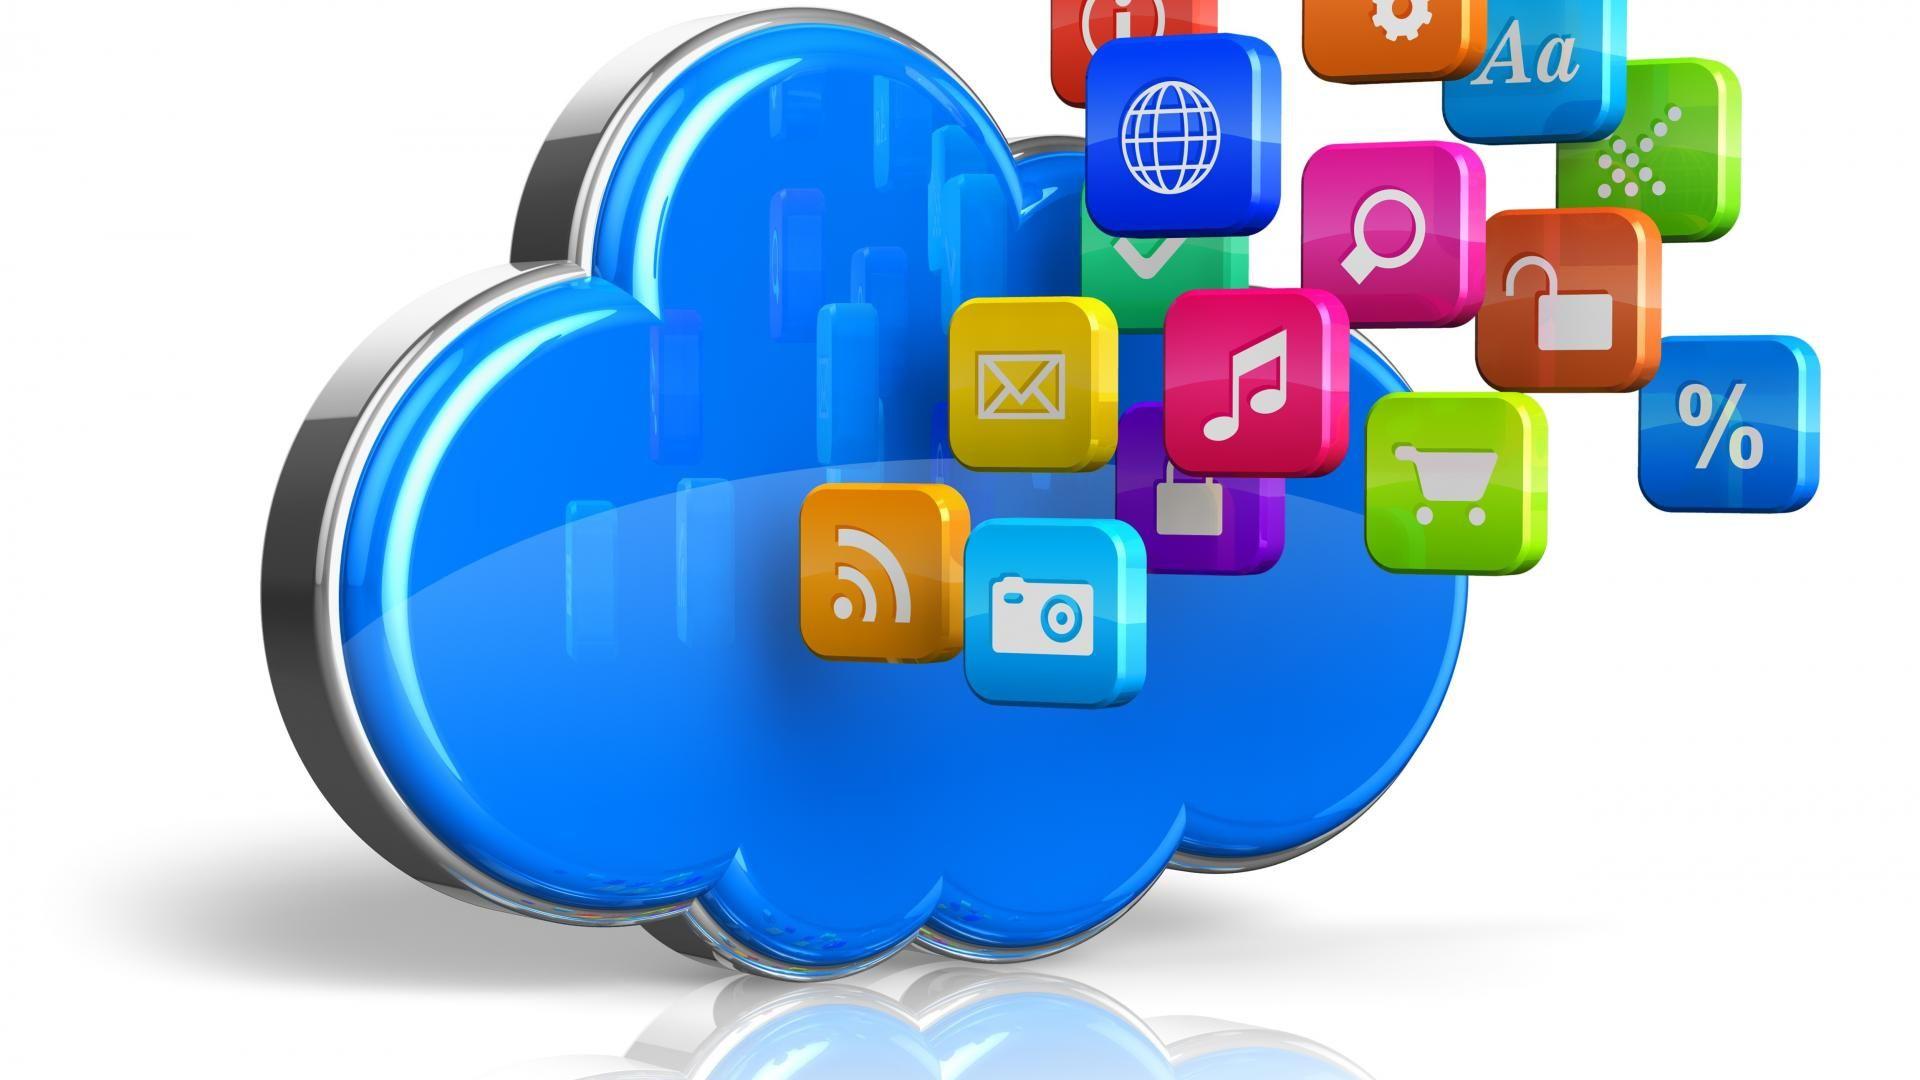 Cloud Computing Wallpapers - Top Free Cloud Computing ...